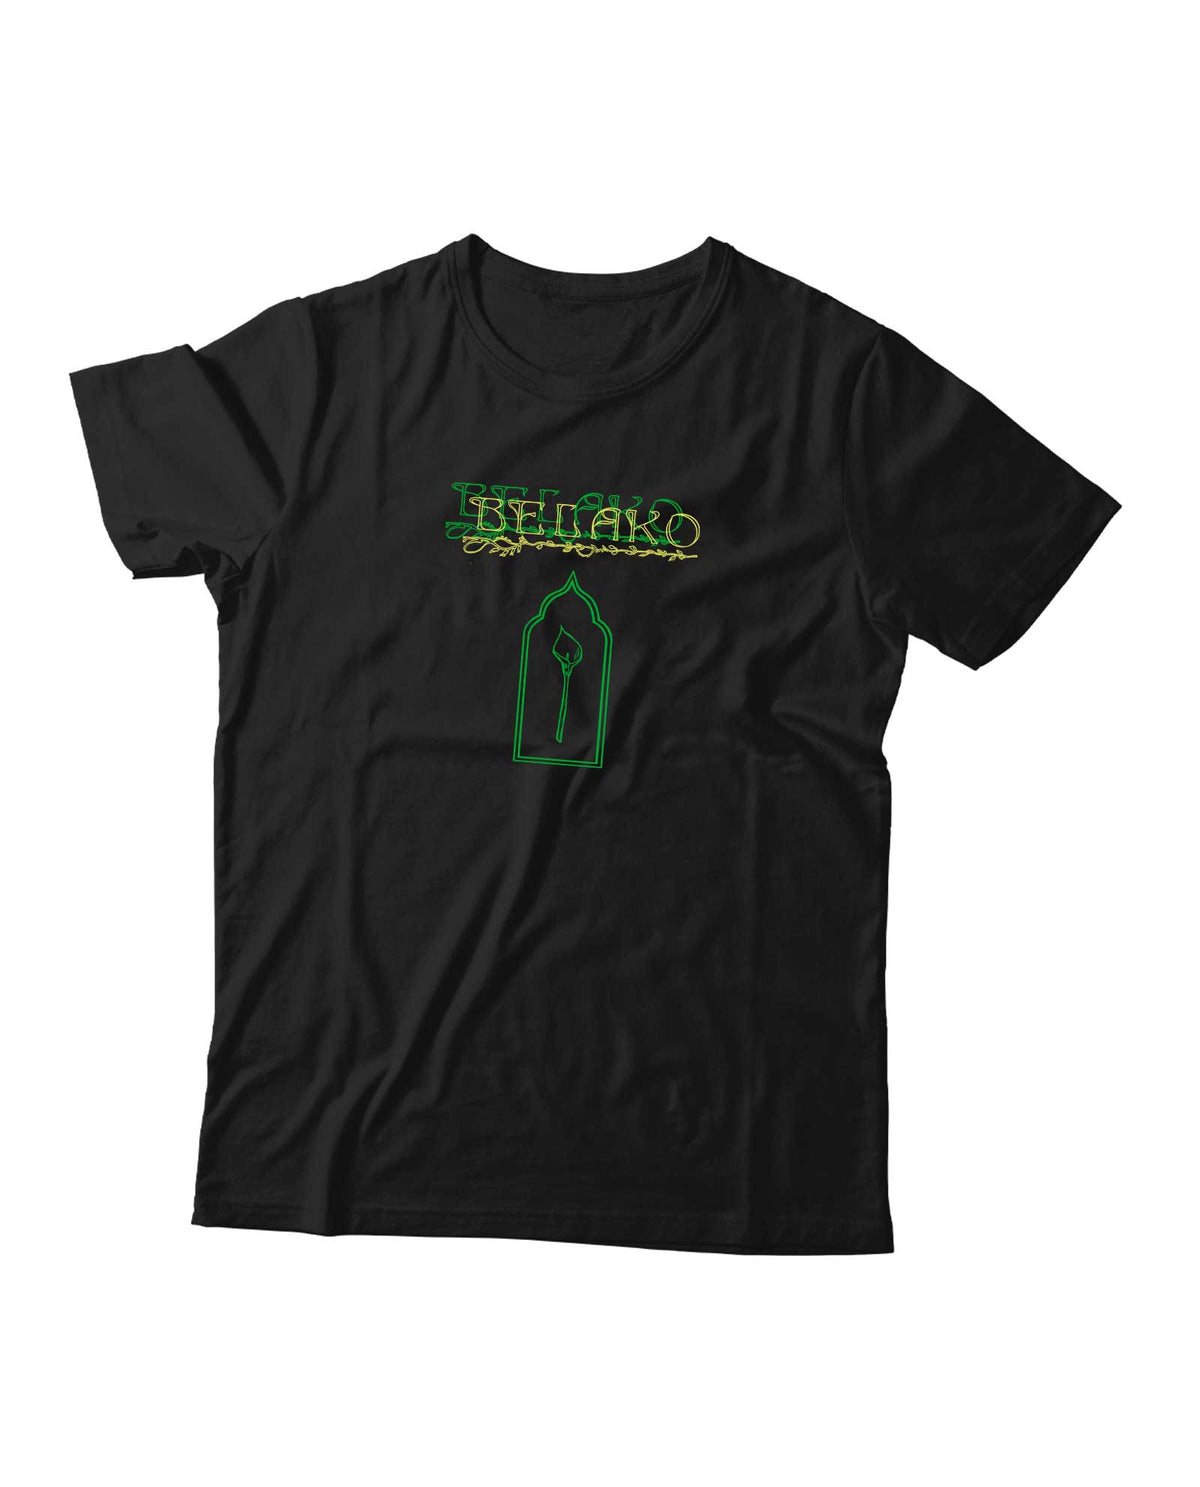 Belako - Camiseta "Sigo Regando" Negra - D2fy · Rocktud - Belako